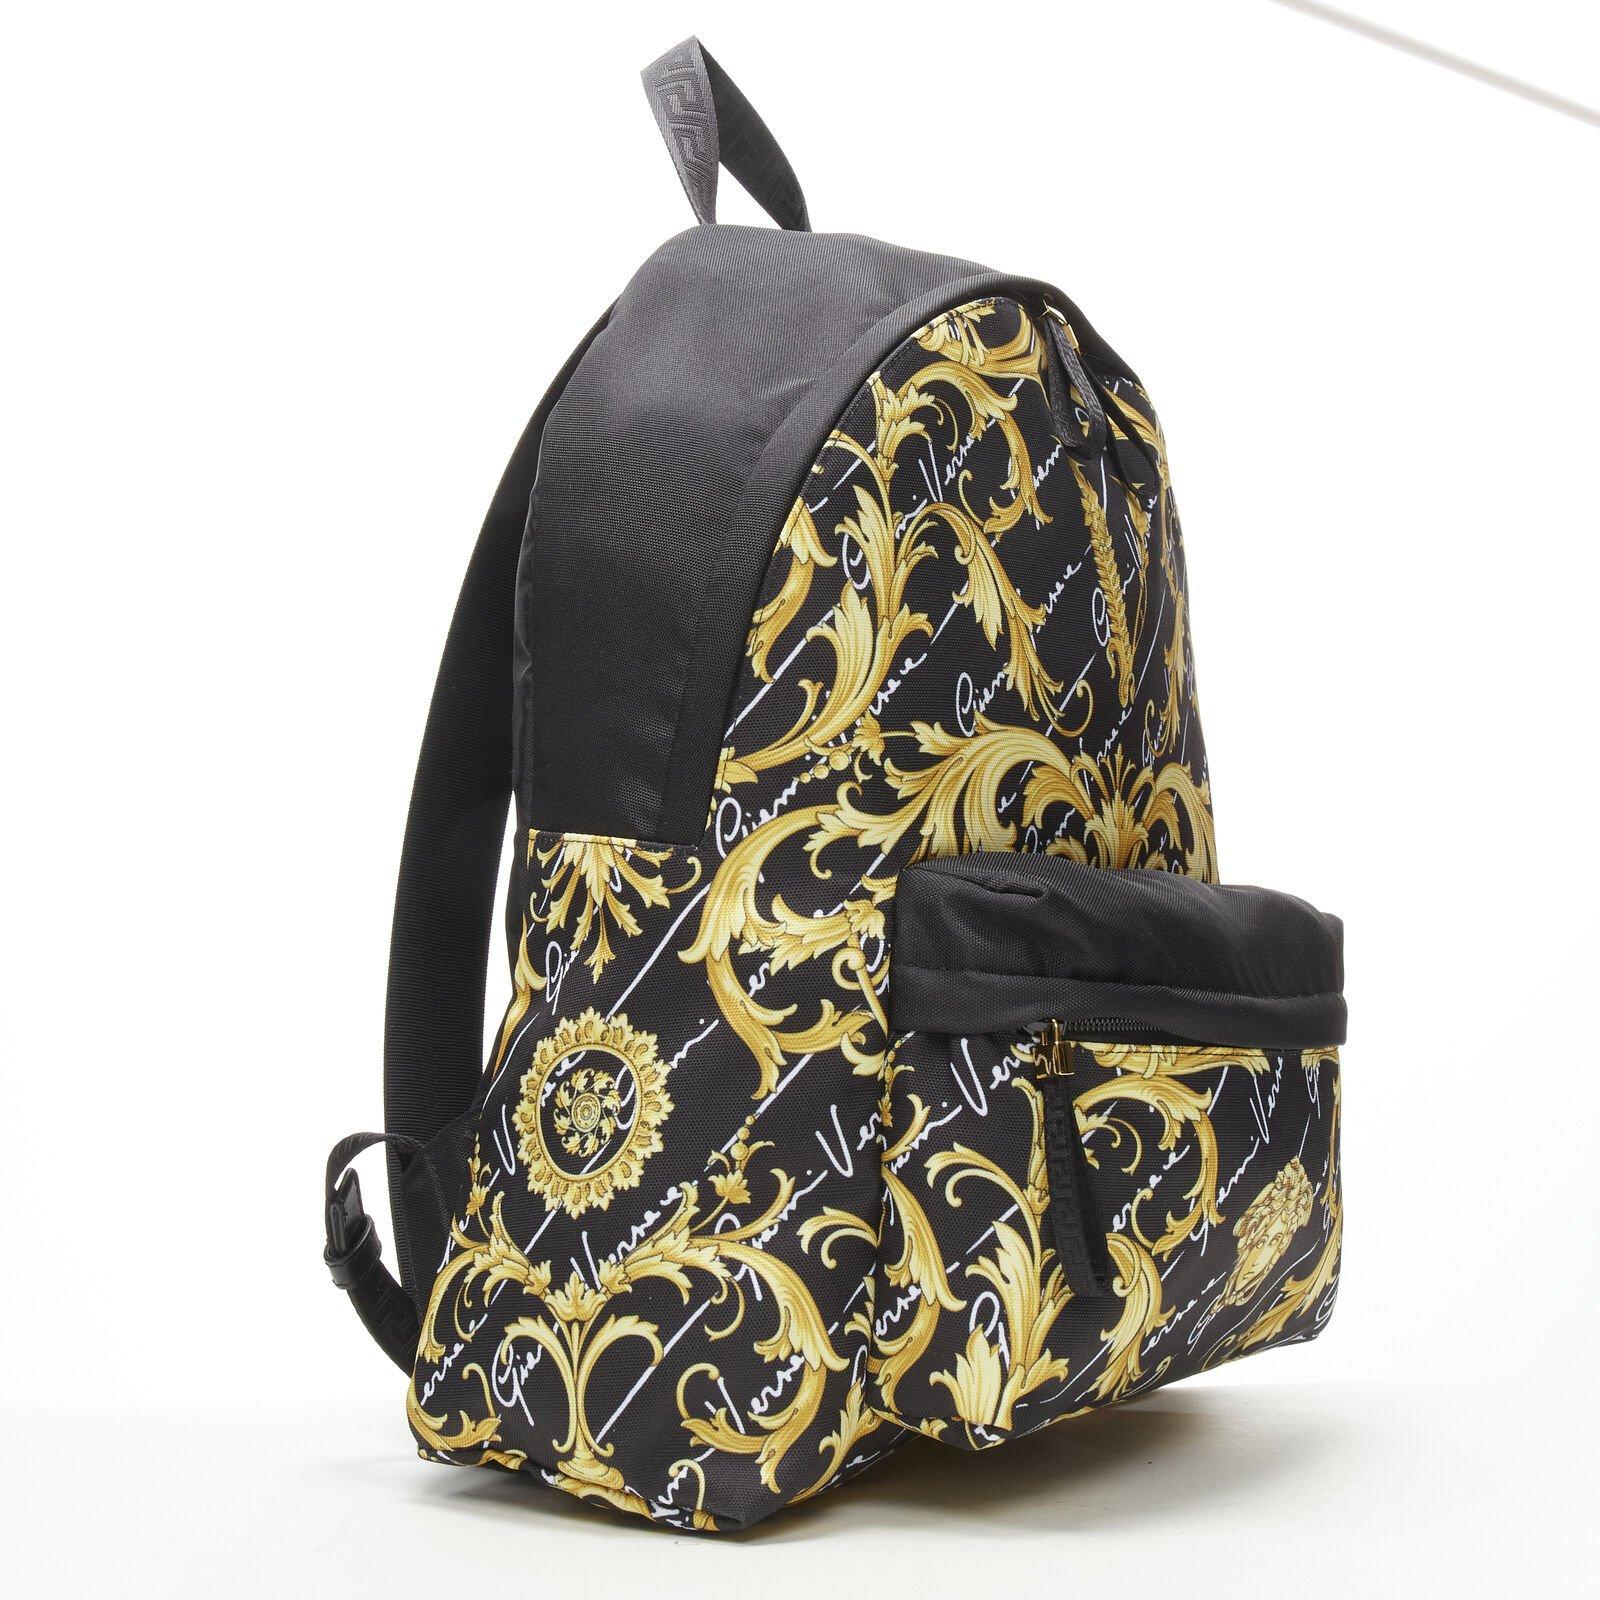 VERSACE Gianni Signature gold Barocco Virtus Medusa print nylon backpack bag
Reference: TGAS/C00567
Brand: Versace
Designer: Donatella Versace
Model: 1002886 1A02182 5800V
Collection: Signature Barocco
Material: Nylon
Color: Black, Gold
Pattern: